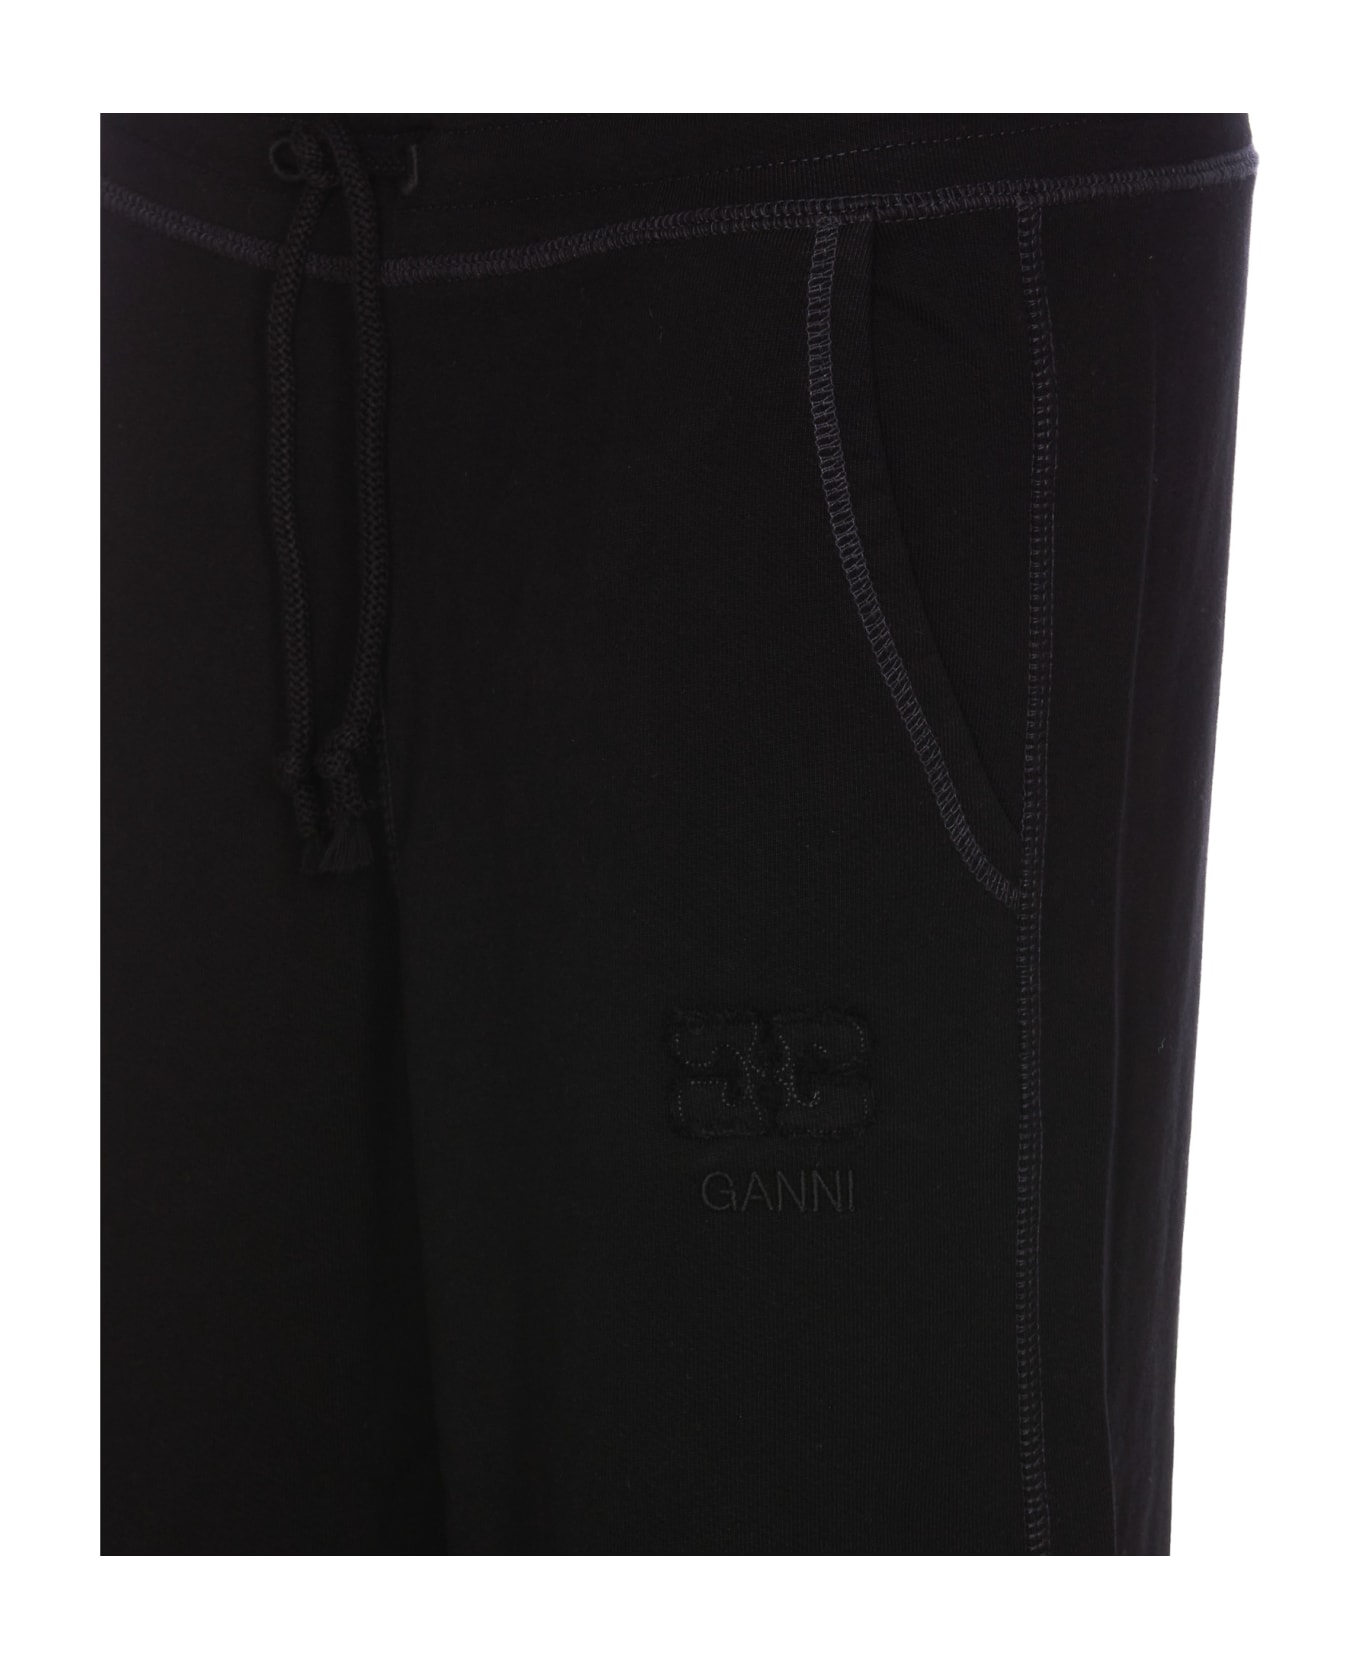 Ganni Light Isoli Cuffed Pants - BLACK